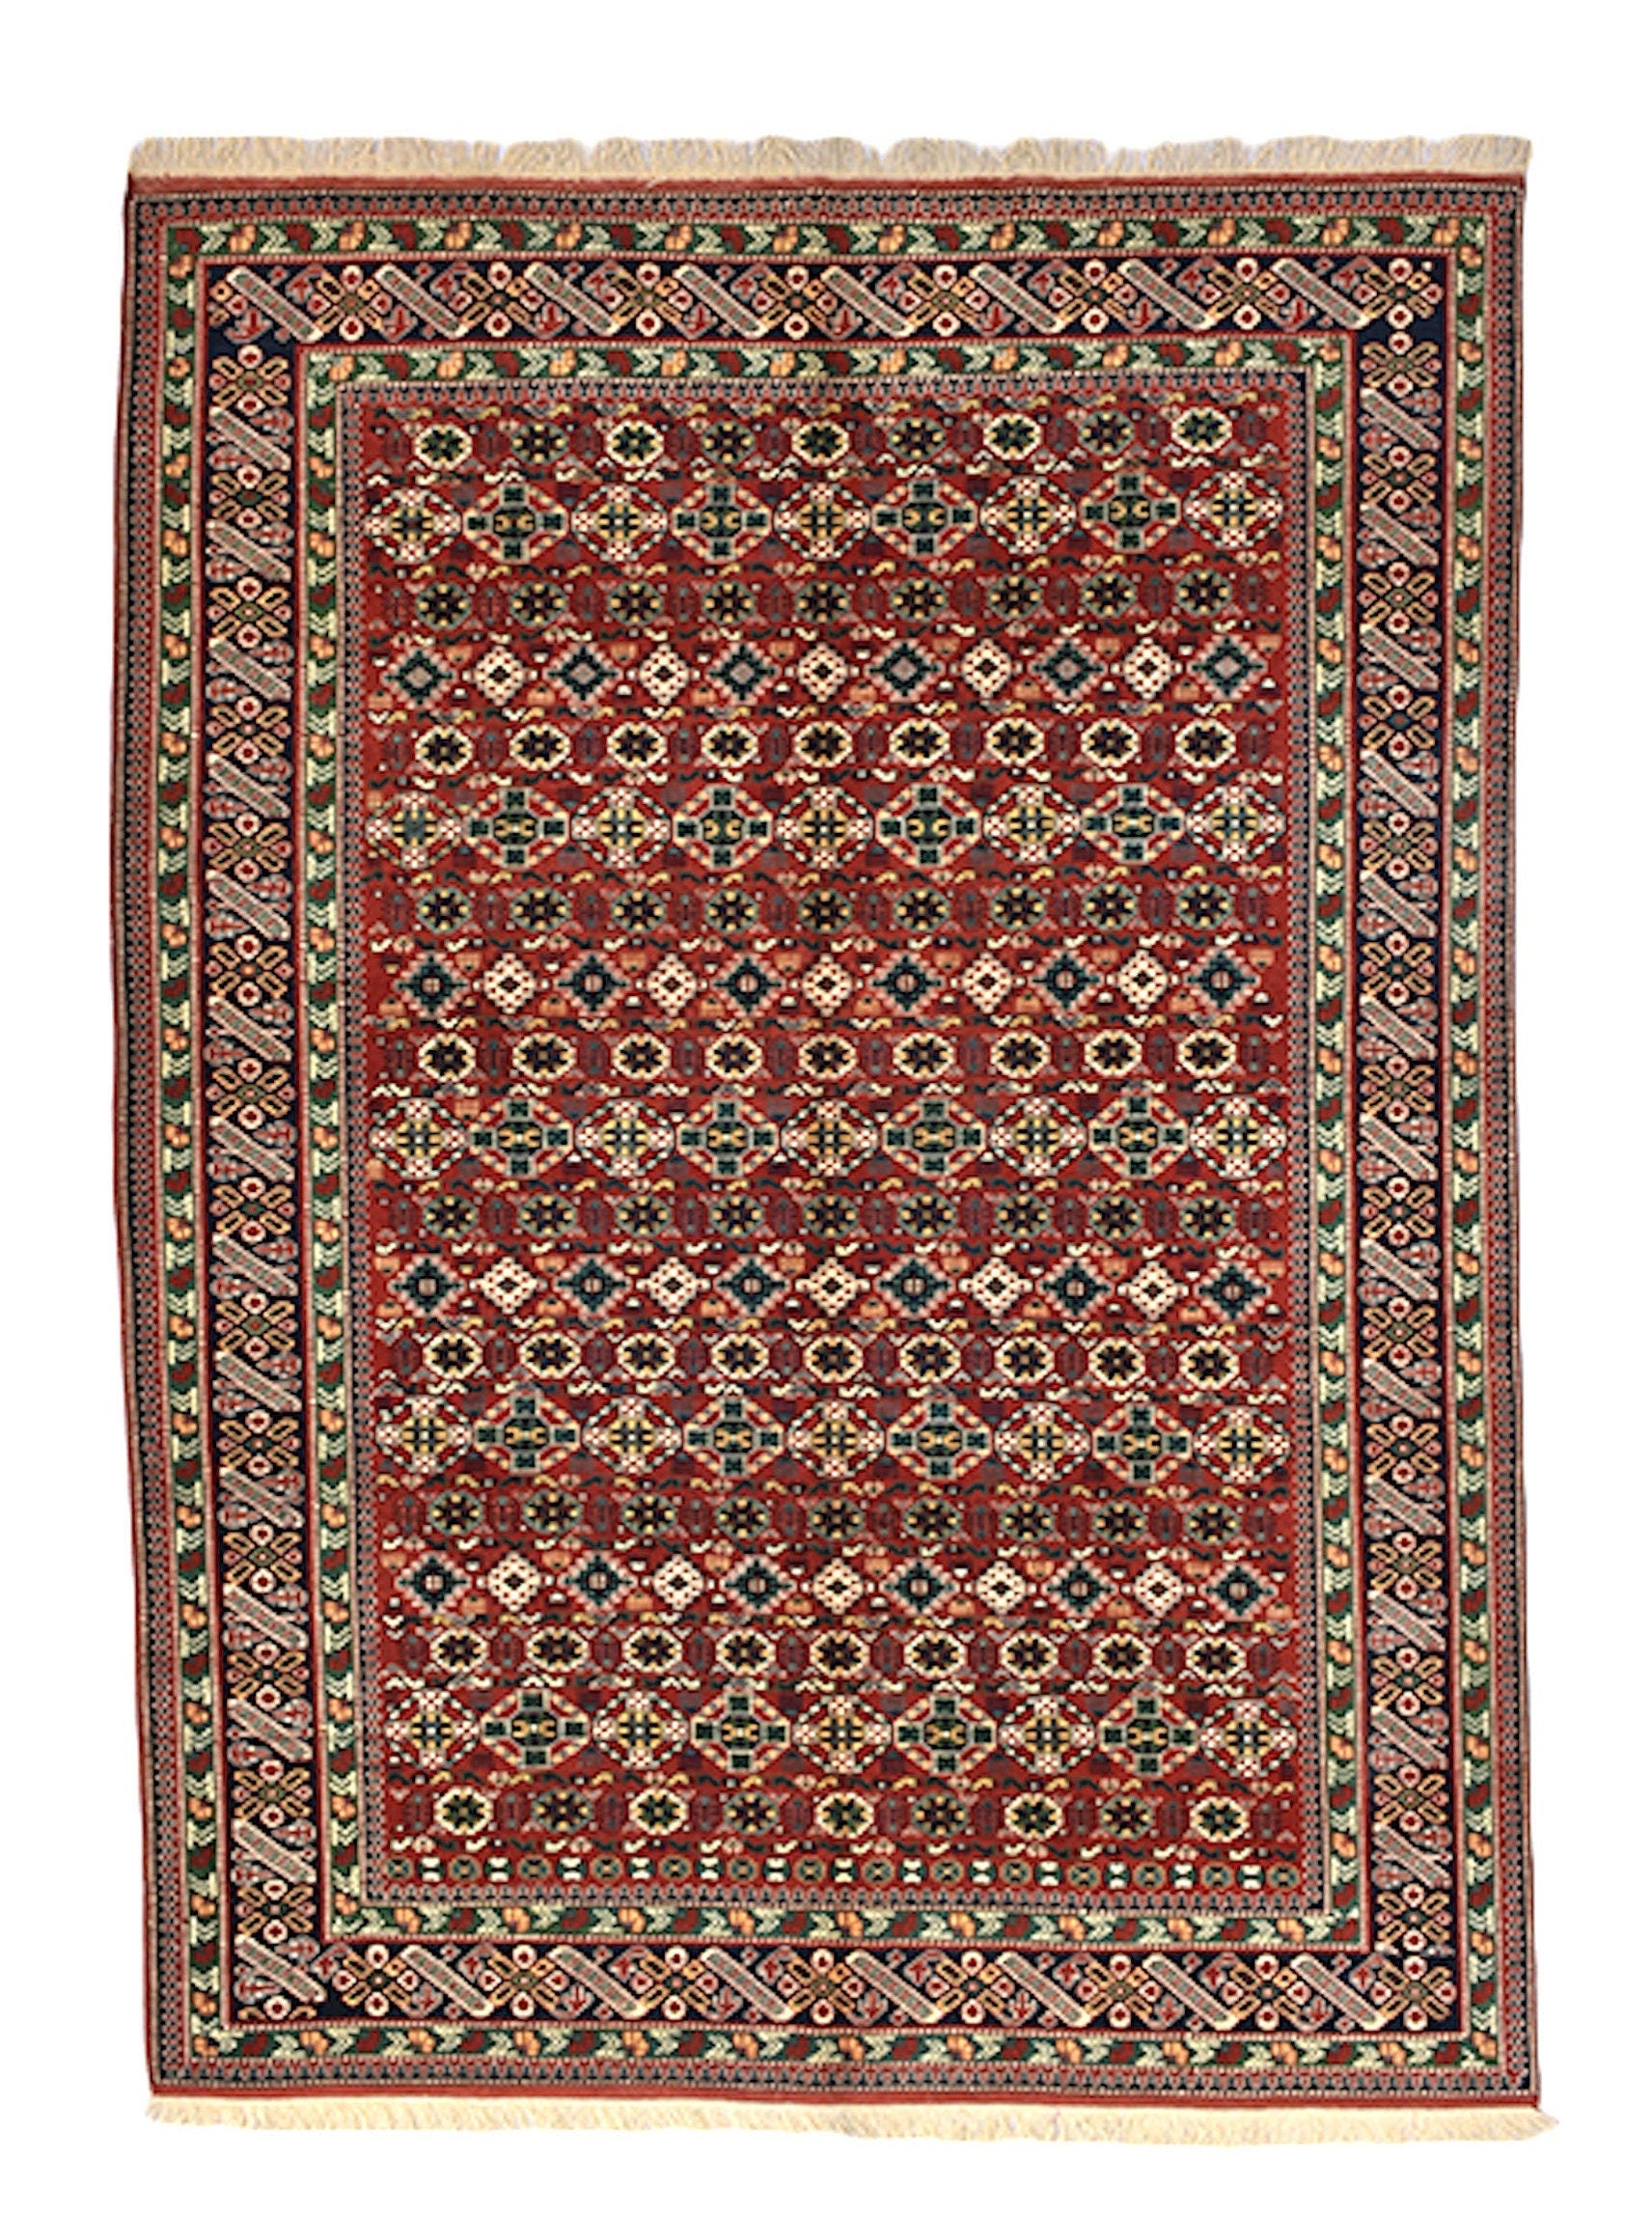 7 x 10 Red Large Turkish Vintage Rug | Handmade Area Rug | Oriental Rug with Black & Green Floral Pattern | Living Room Geometric Wool